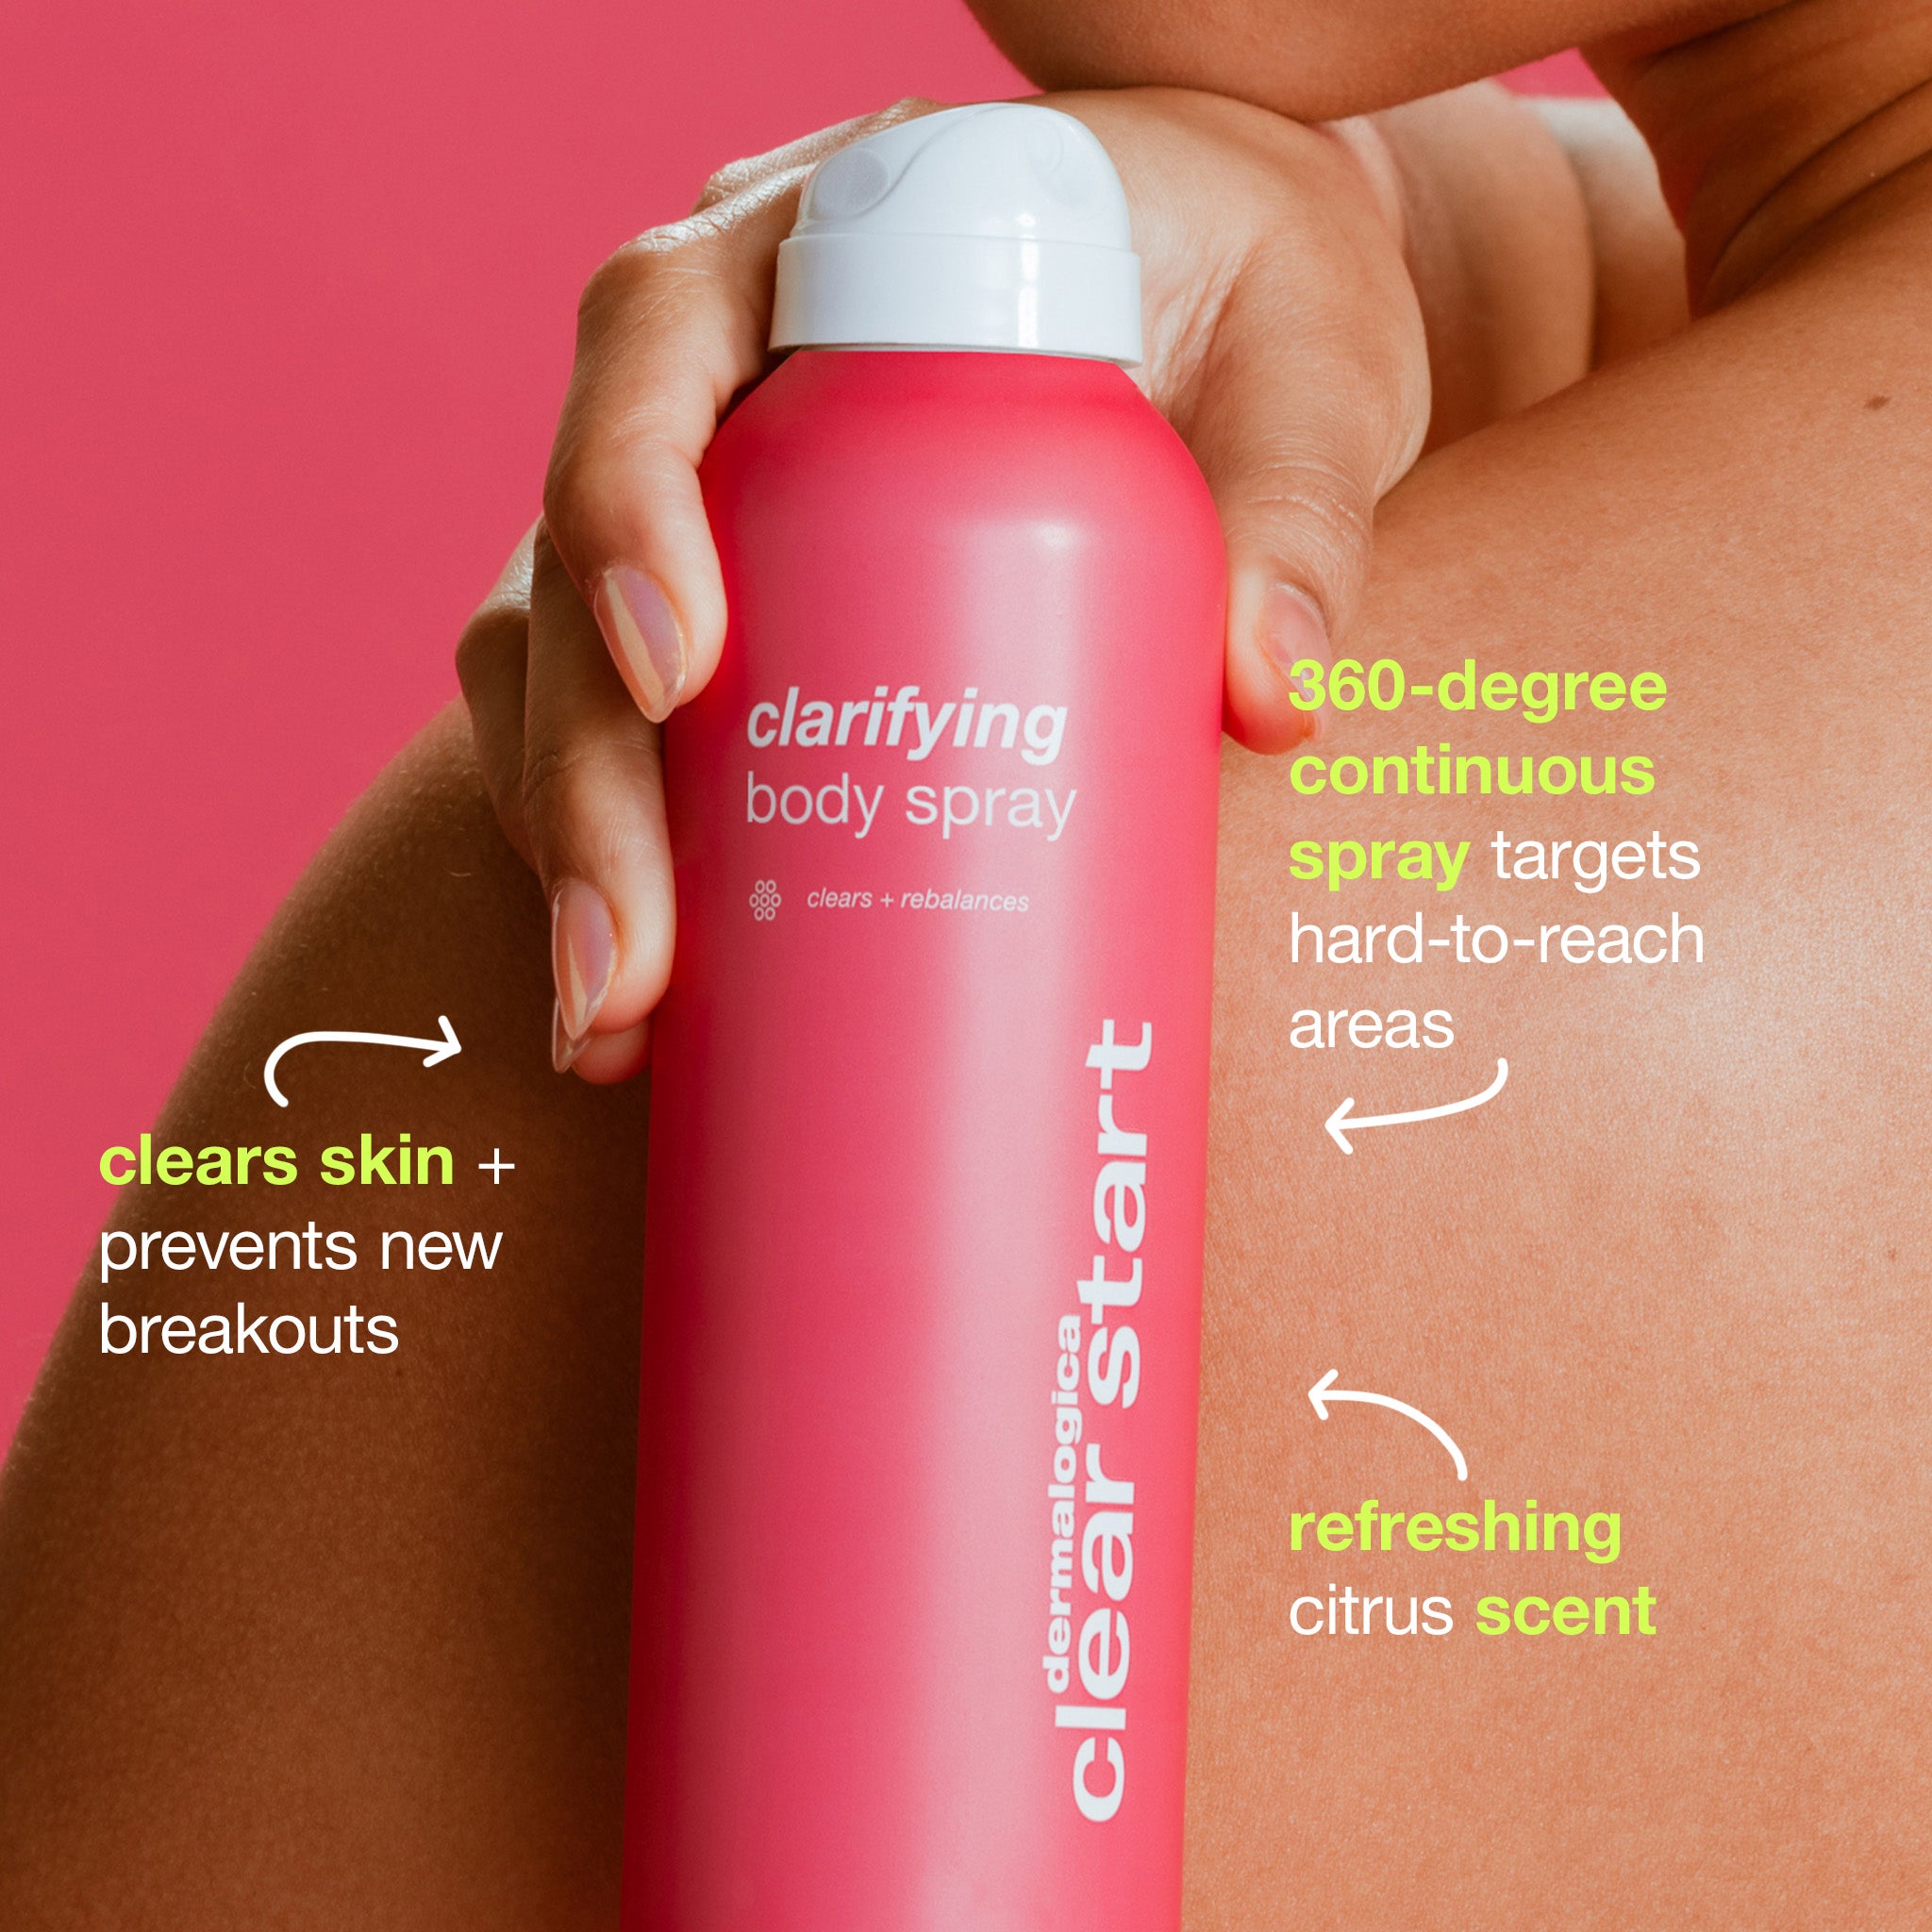 clarifying body spray